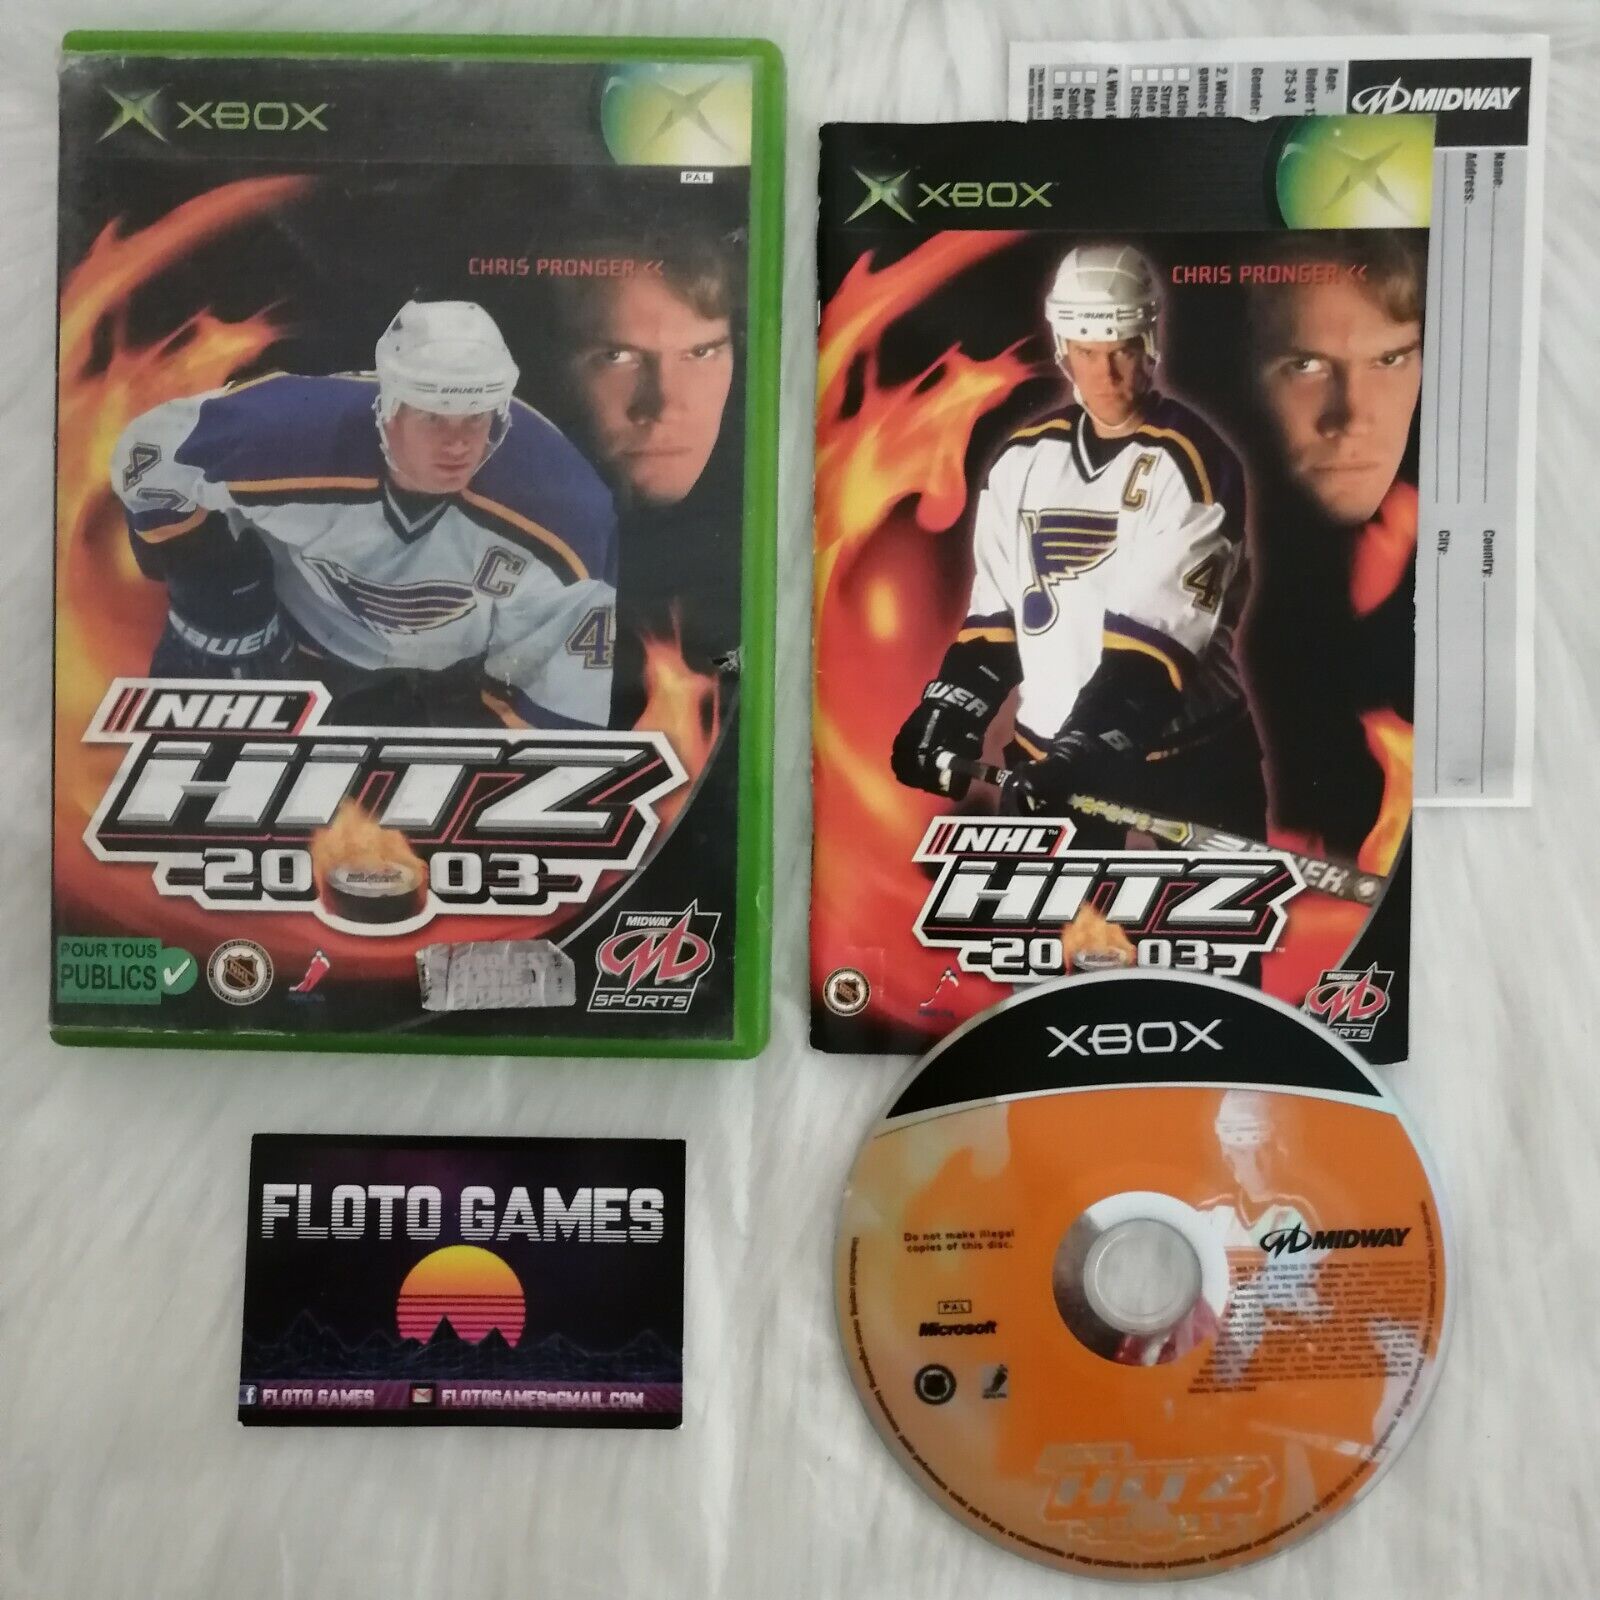 Jeu NHL Hitz 20 03 / 2003 pour XBOX PAL FR Complet CIB - Floto Games